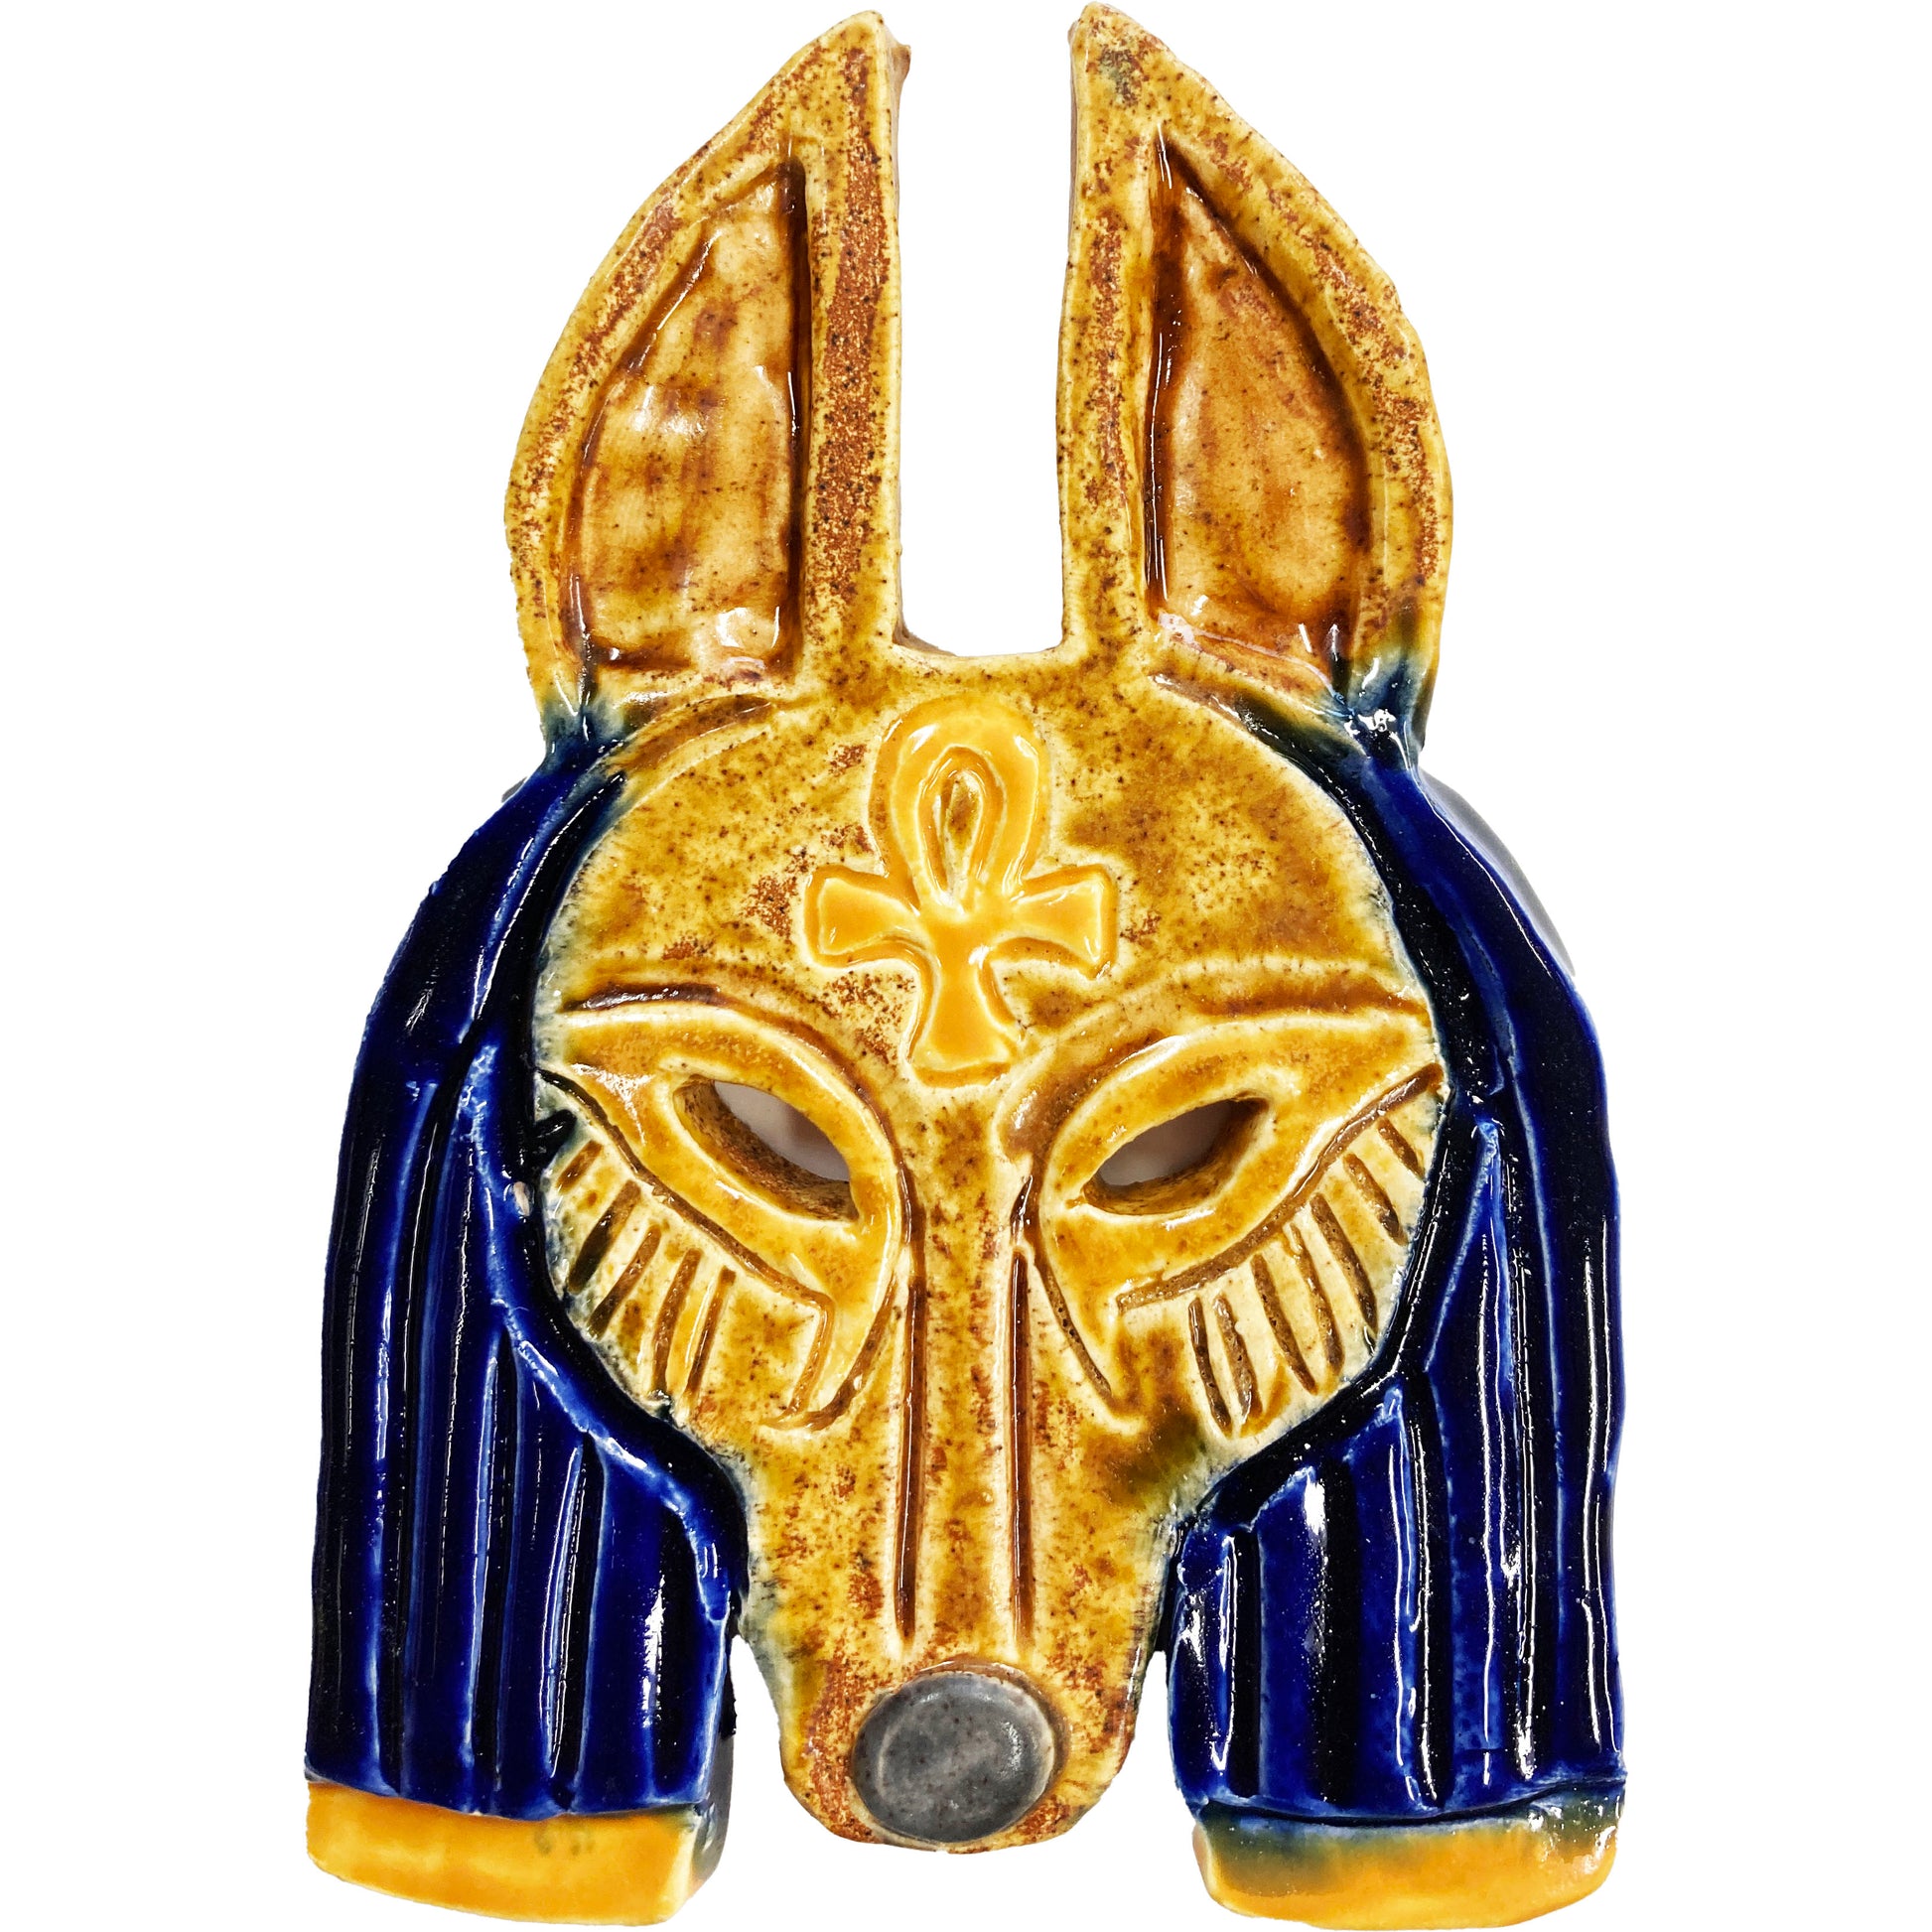 WATCH Resources Art Guild - Ceramic Arts Handmade Clay Crafts 6-inch x 4-inch Glazed Anubis made by Lisa Uptain